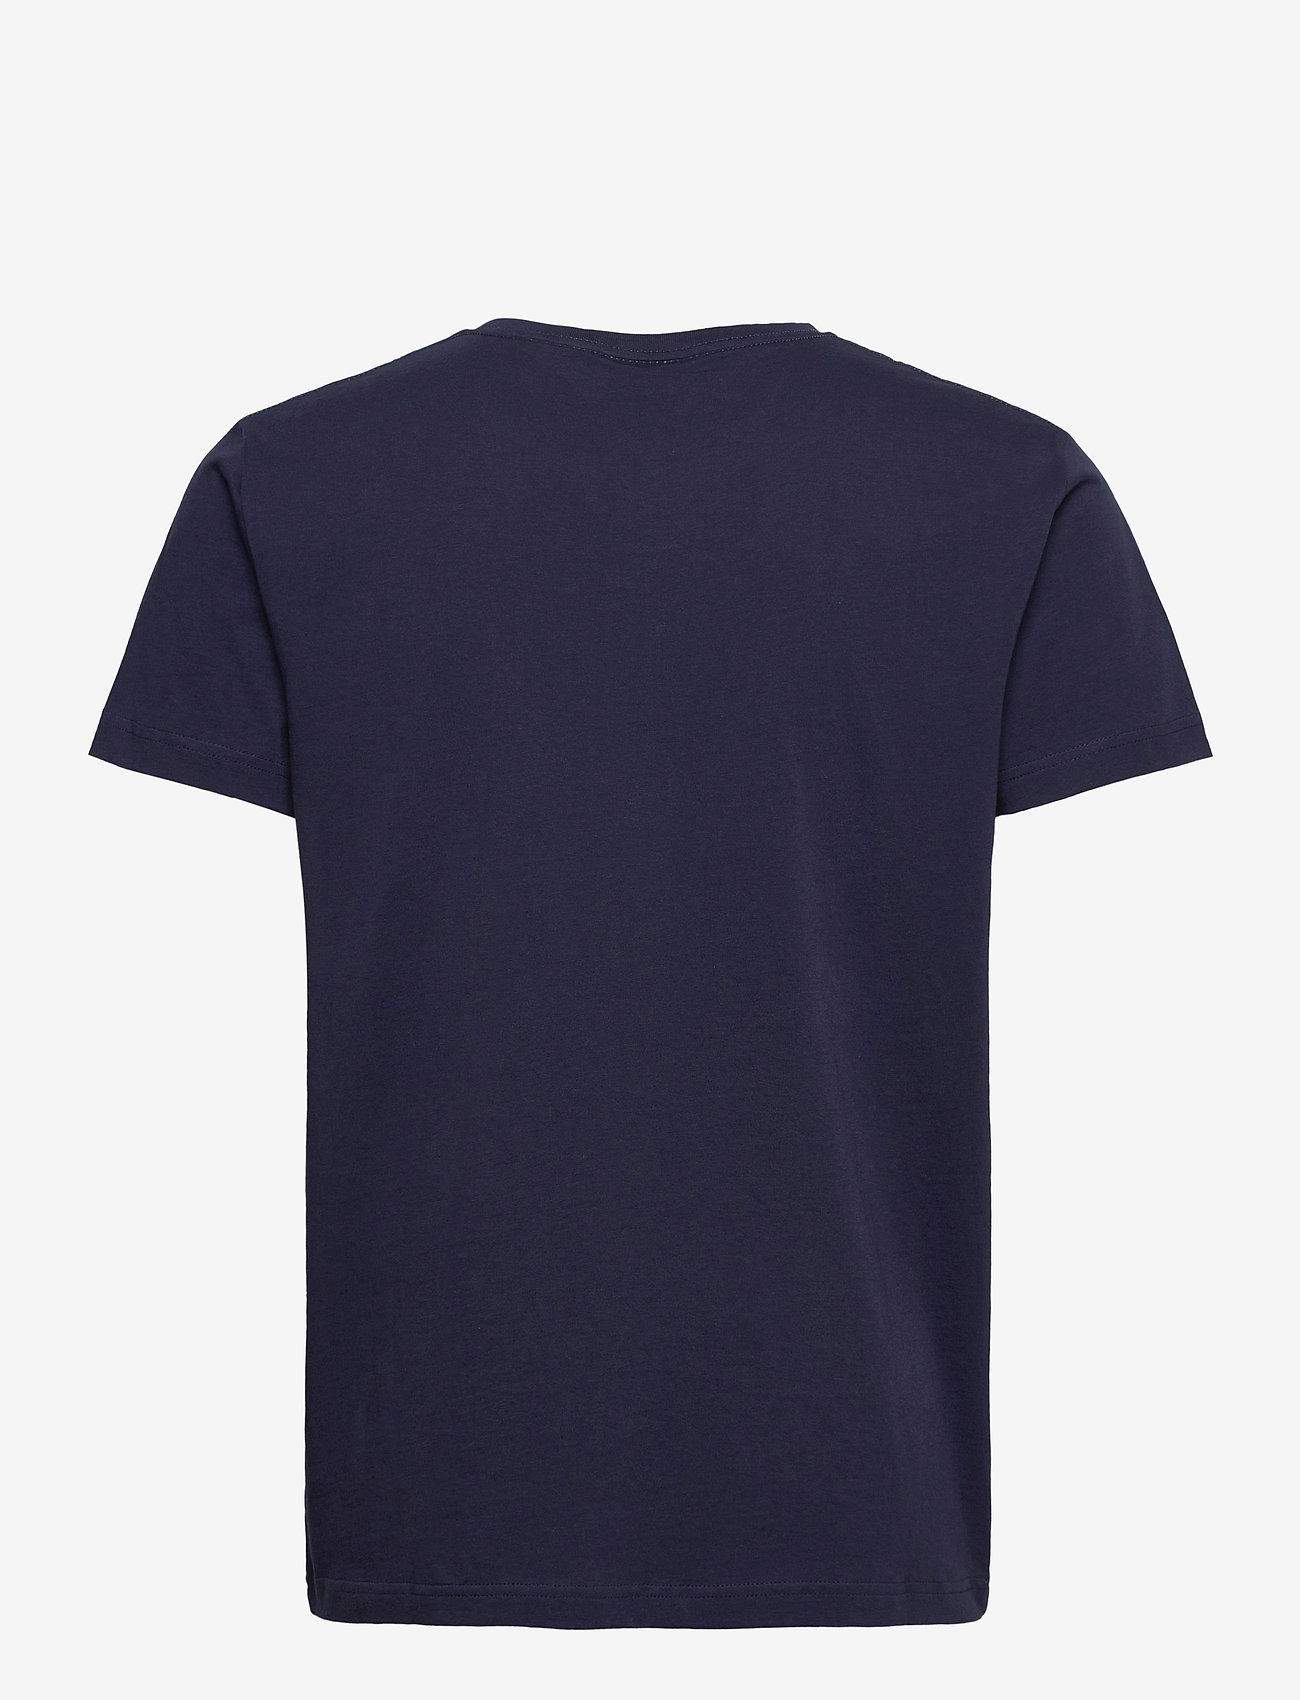 GANT - ARCHIVE SHIELD EMB SS T-SHIRT - short-sleeved t-shirts - evening blue - 1